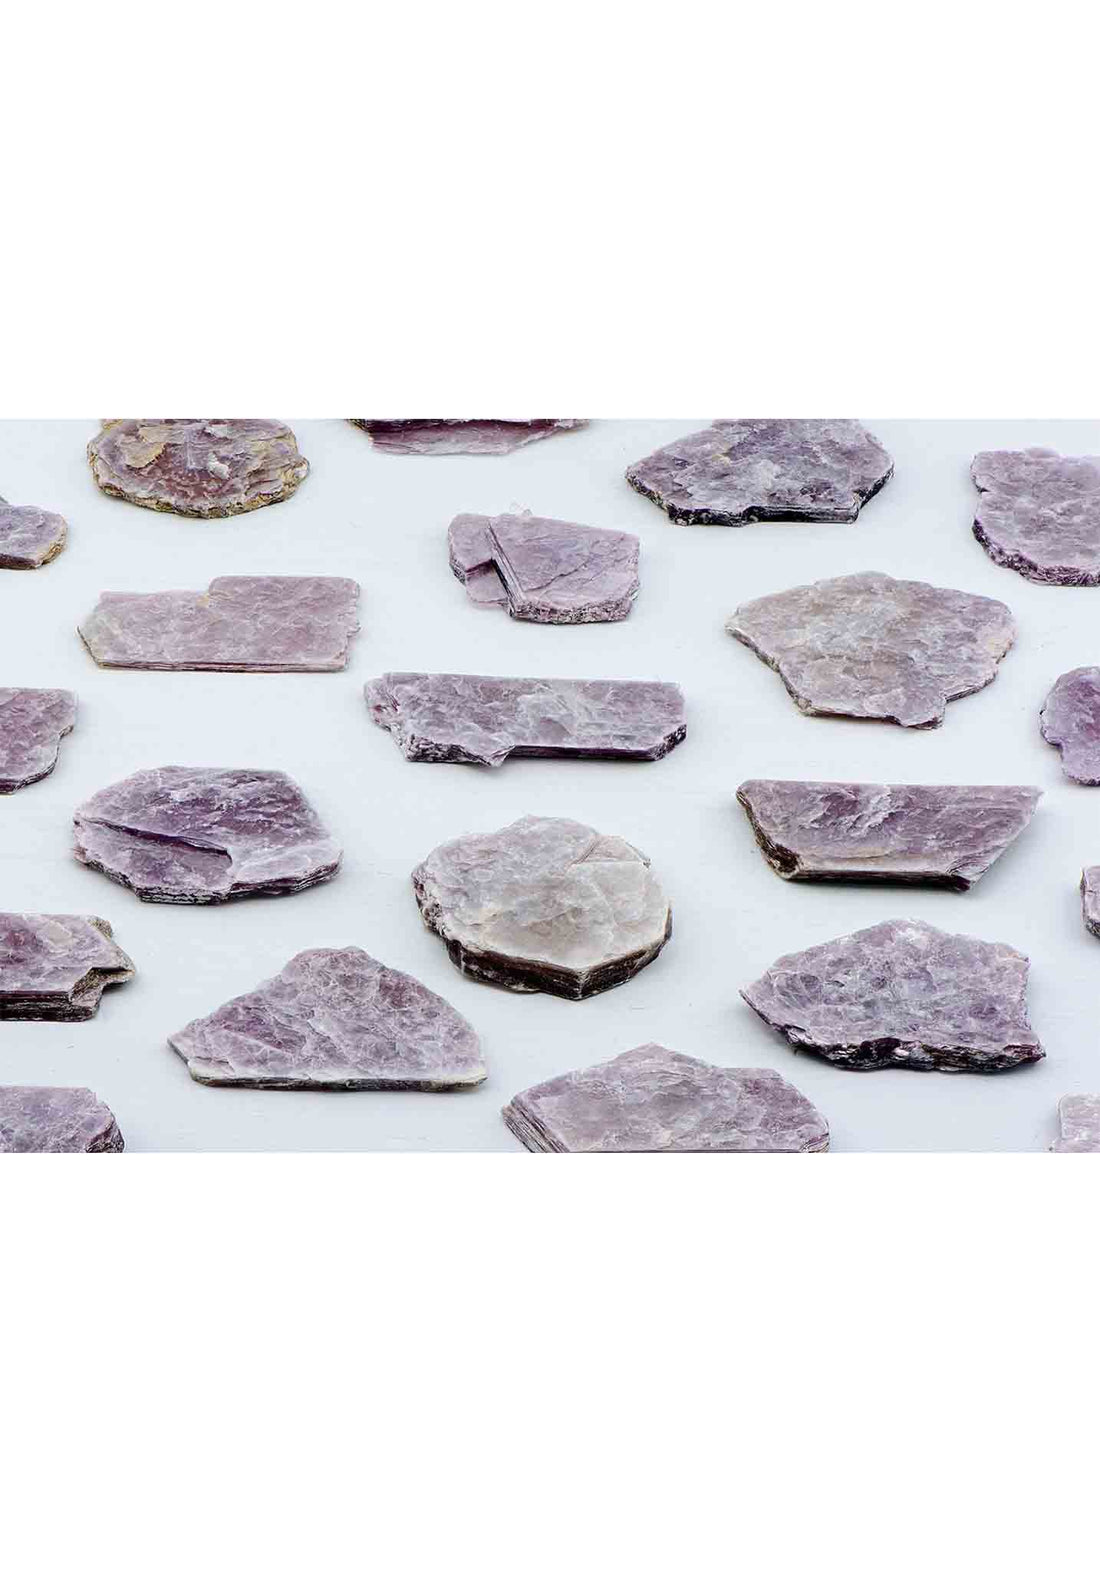 Lepidolite - Pink Lithium Mica - Gemstone Cleavage Slice - Stone of Letting Go 2